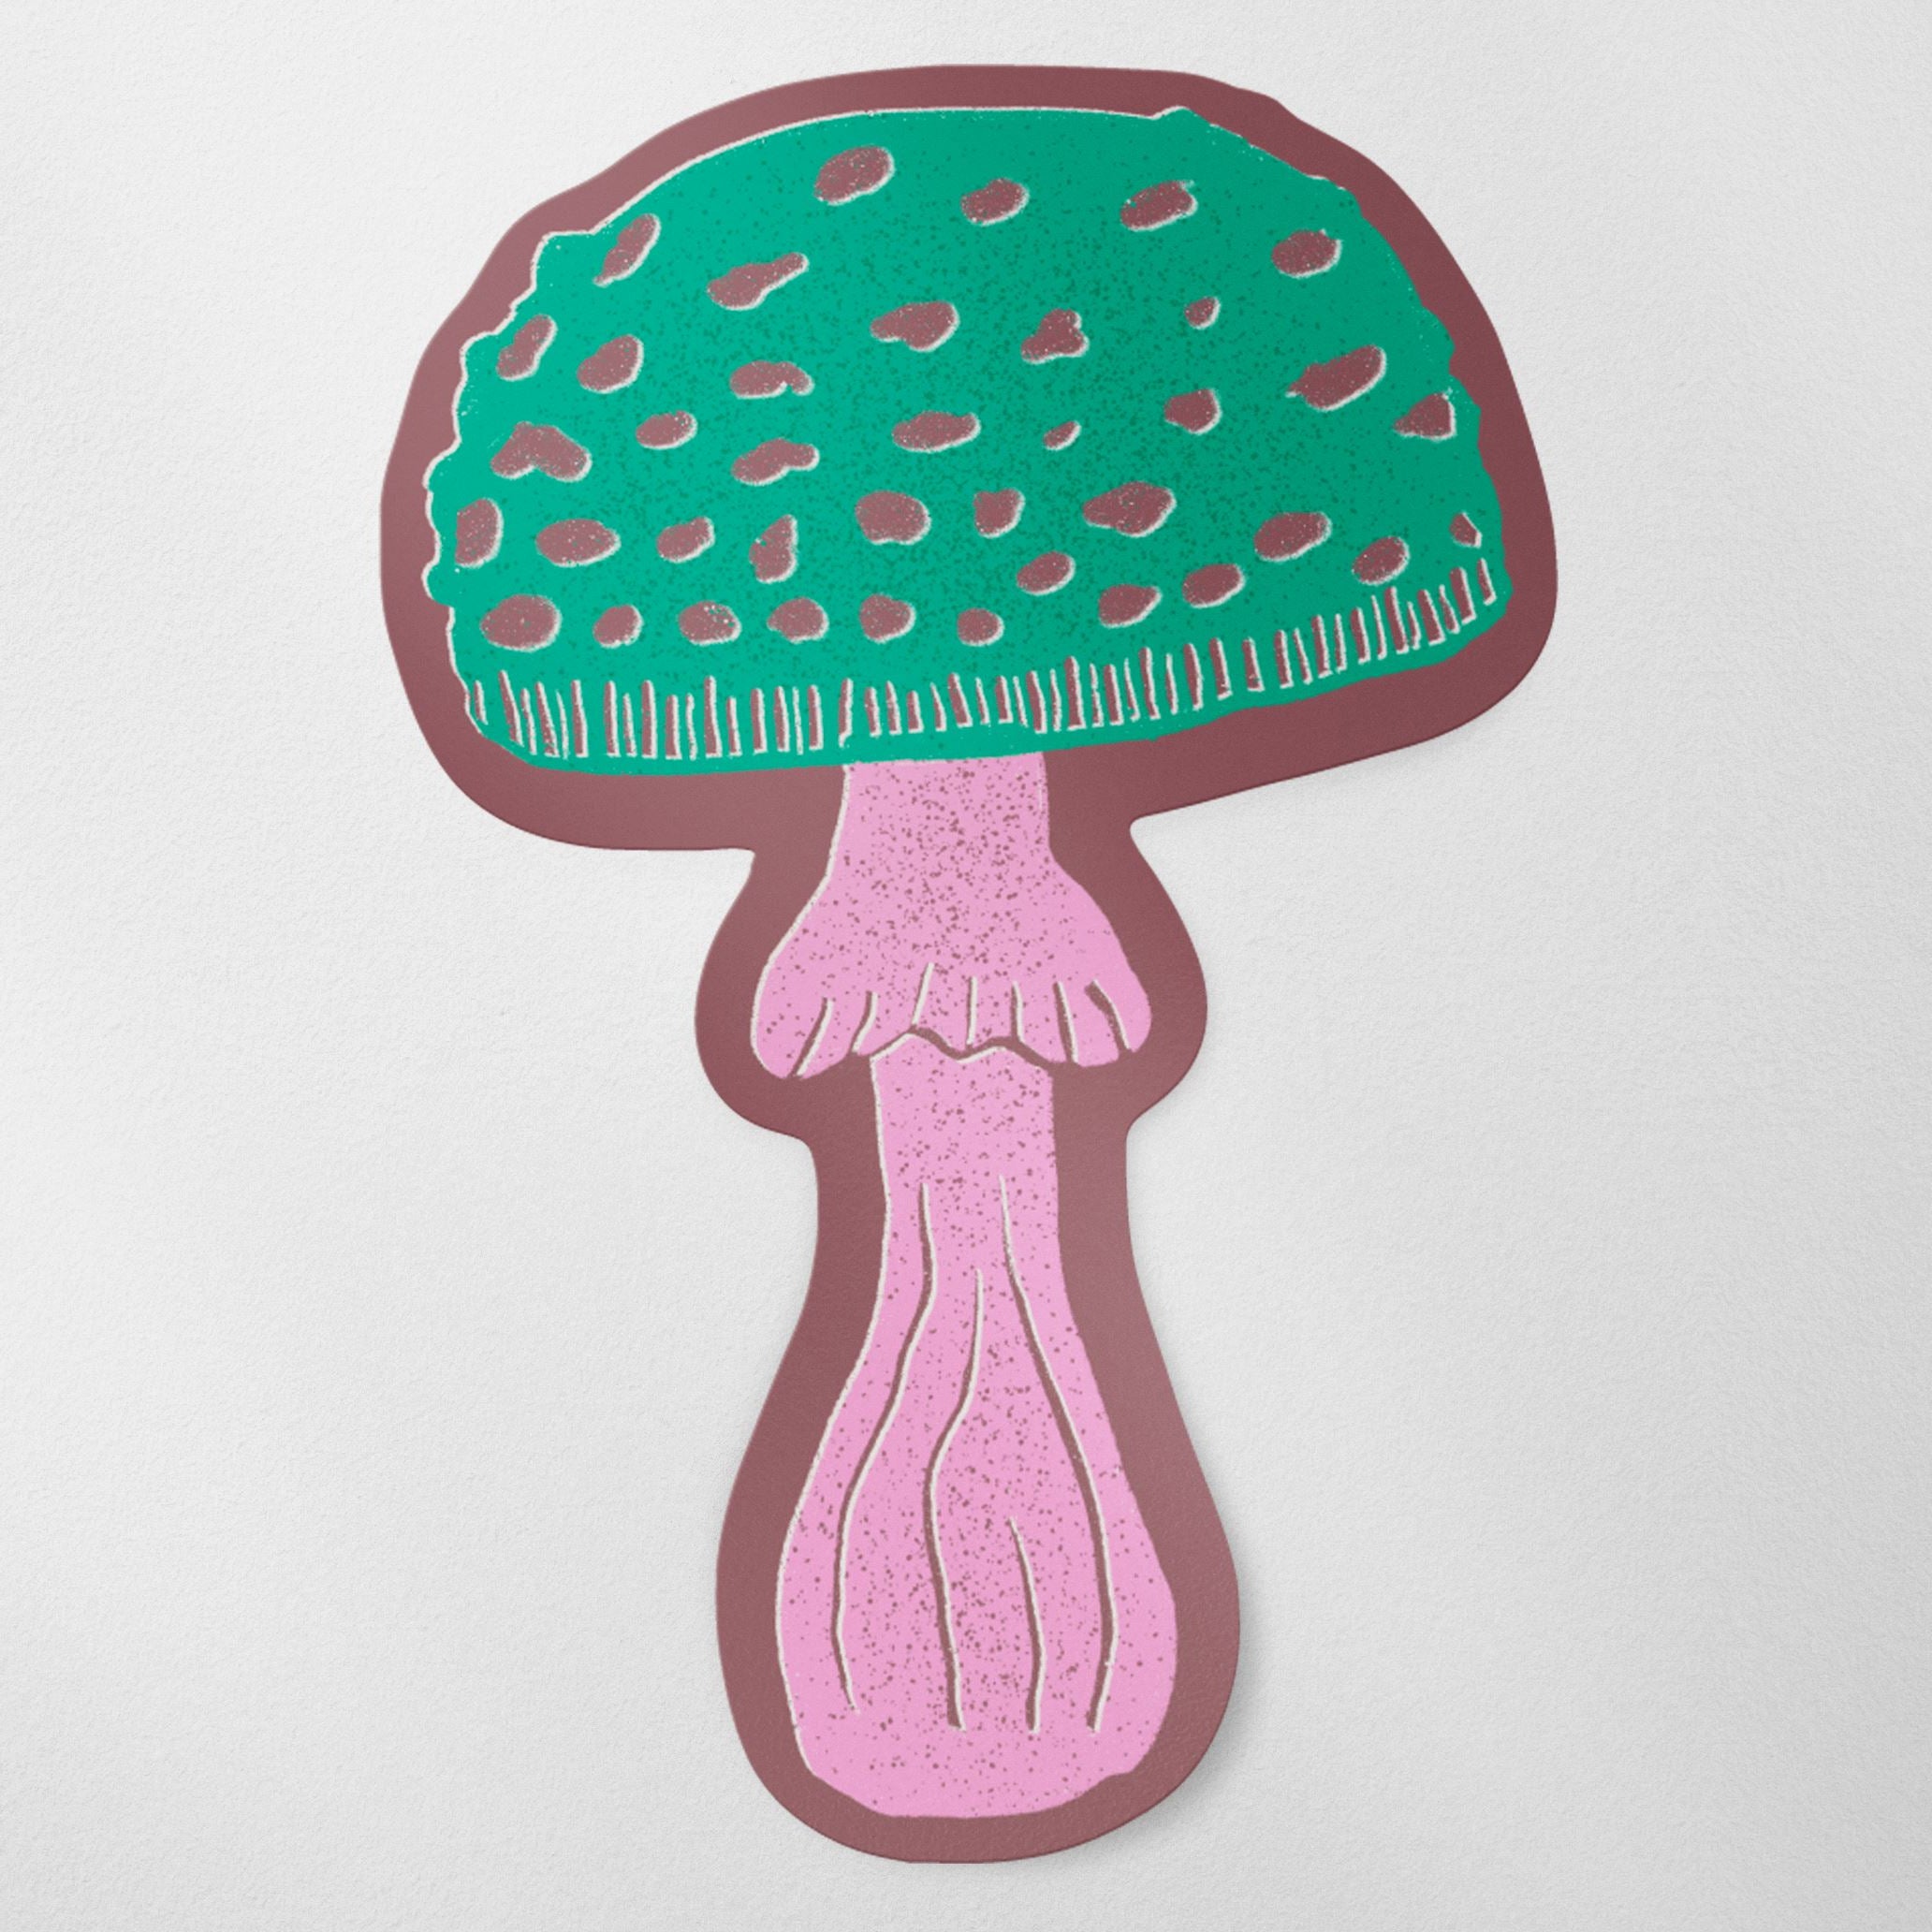 Linocut Mushroom Matte Vinyl Sticker stickers Lucid Moon Studio Green and pink mushroom maroon background 